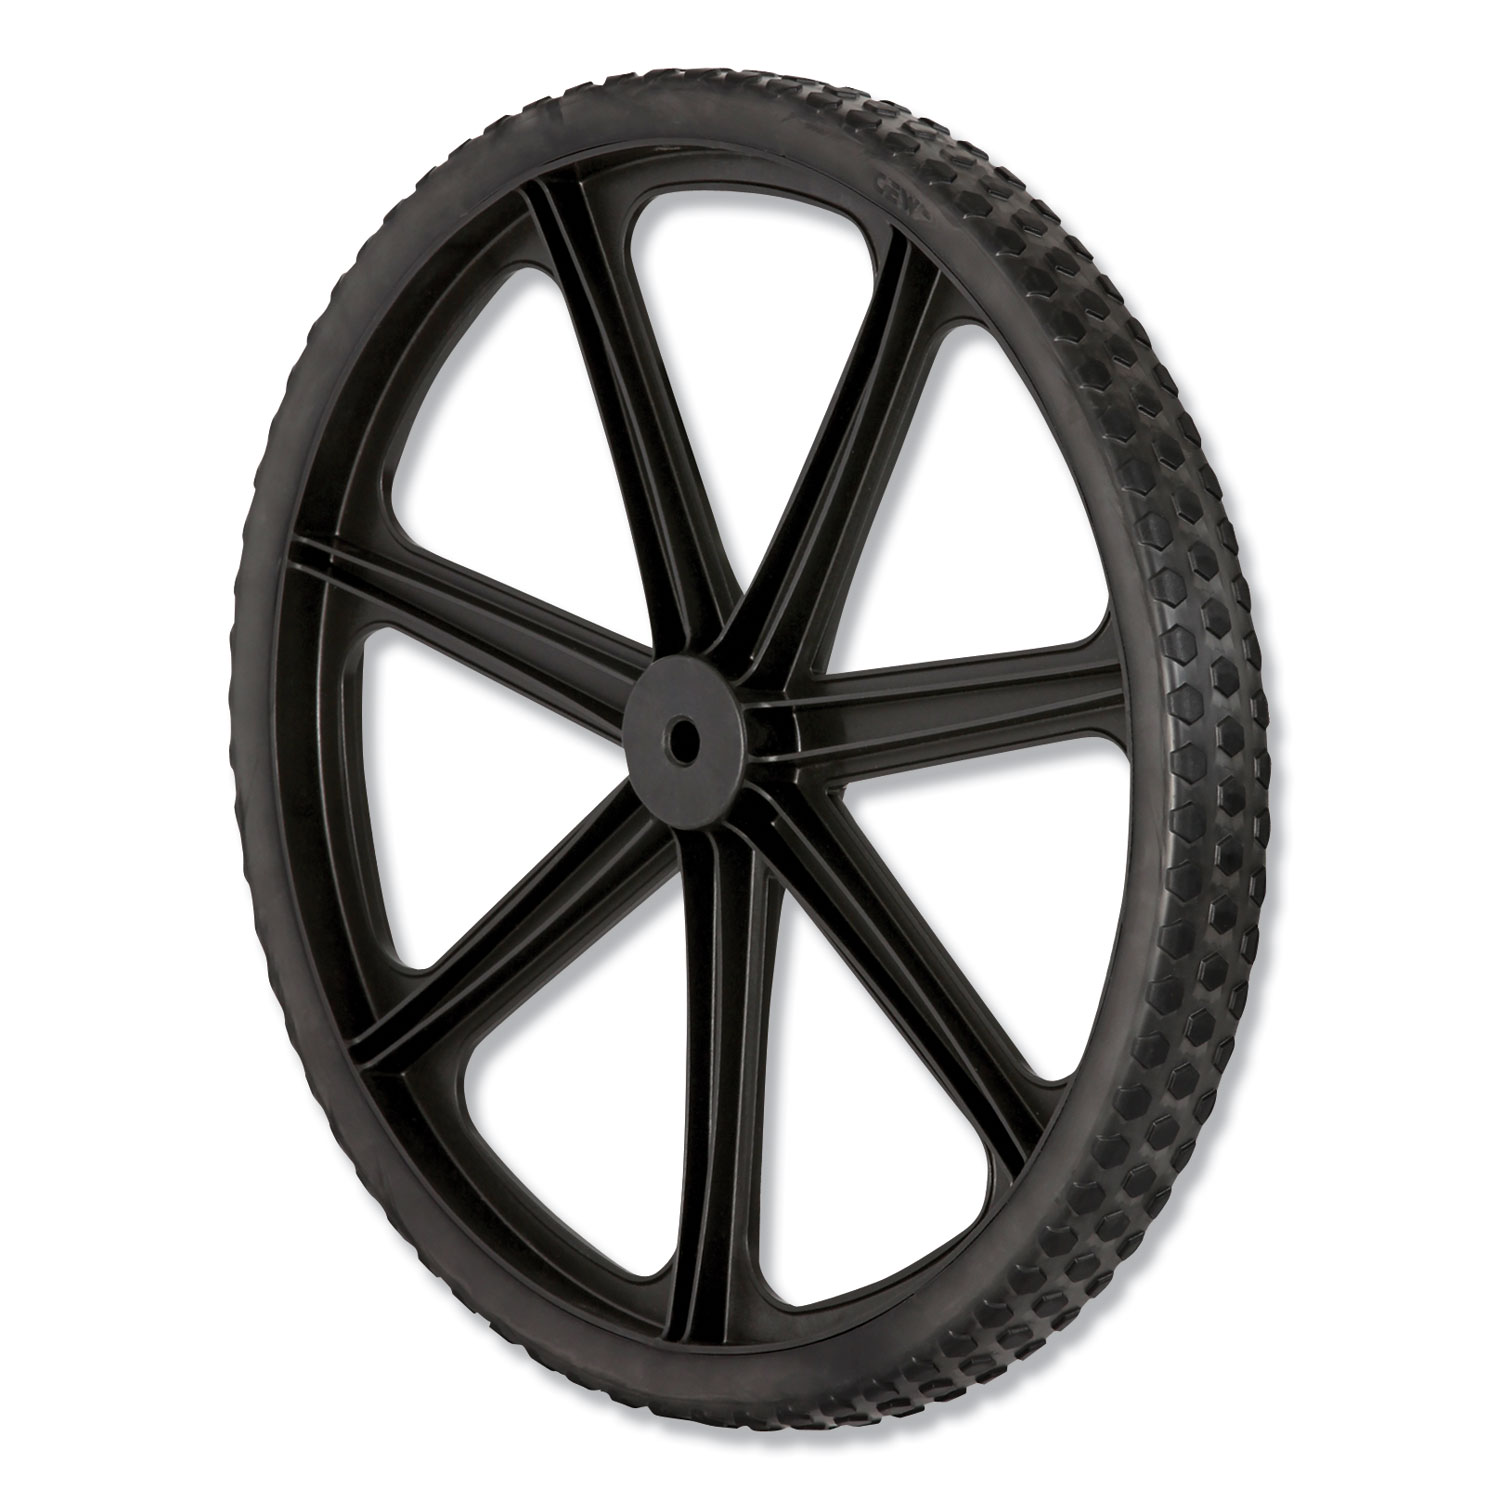  Rubbermaid Commercial M1564200 Wheel for 5642, 5642-61 Big Wheel Cart, 20 diameter, Black (RCPM1564200) 